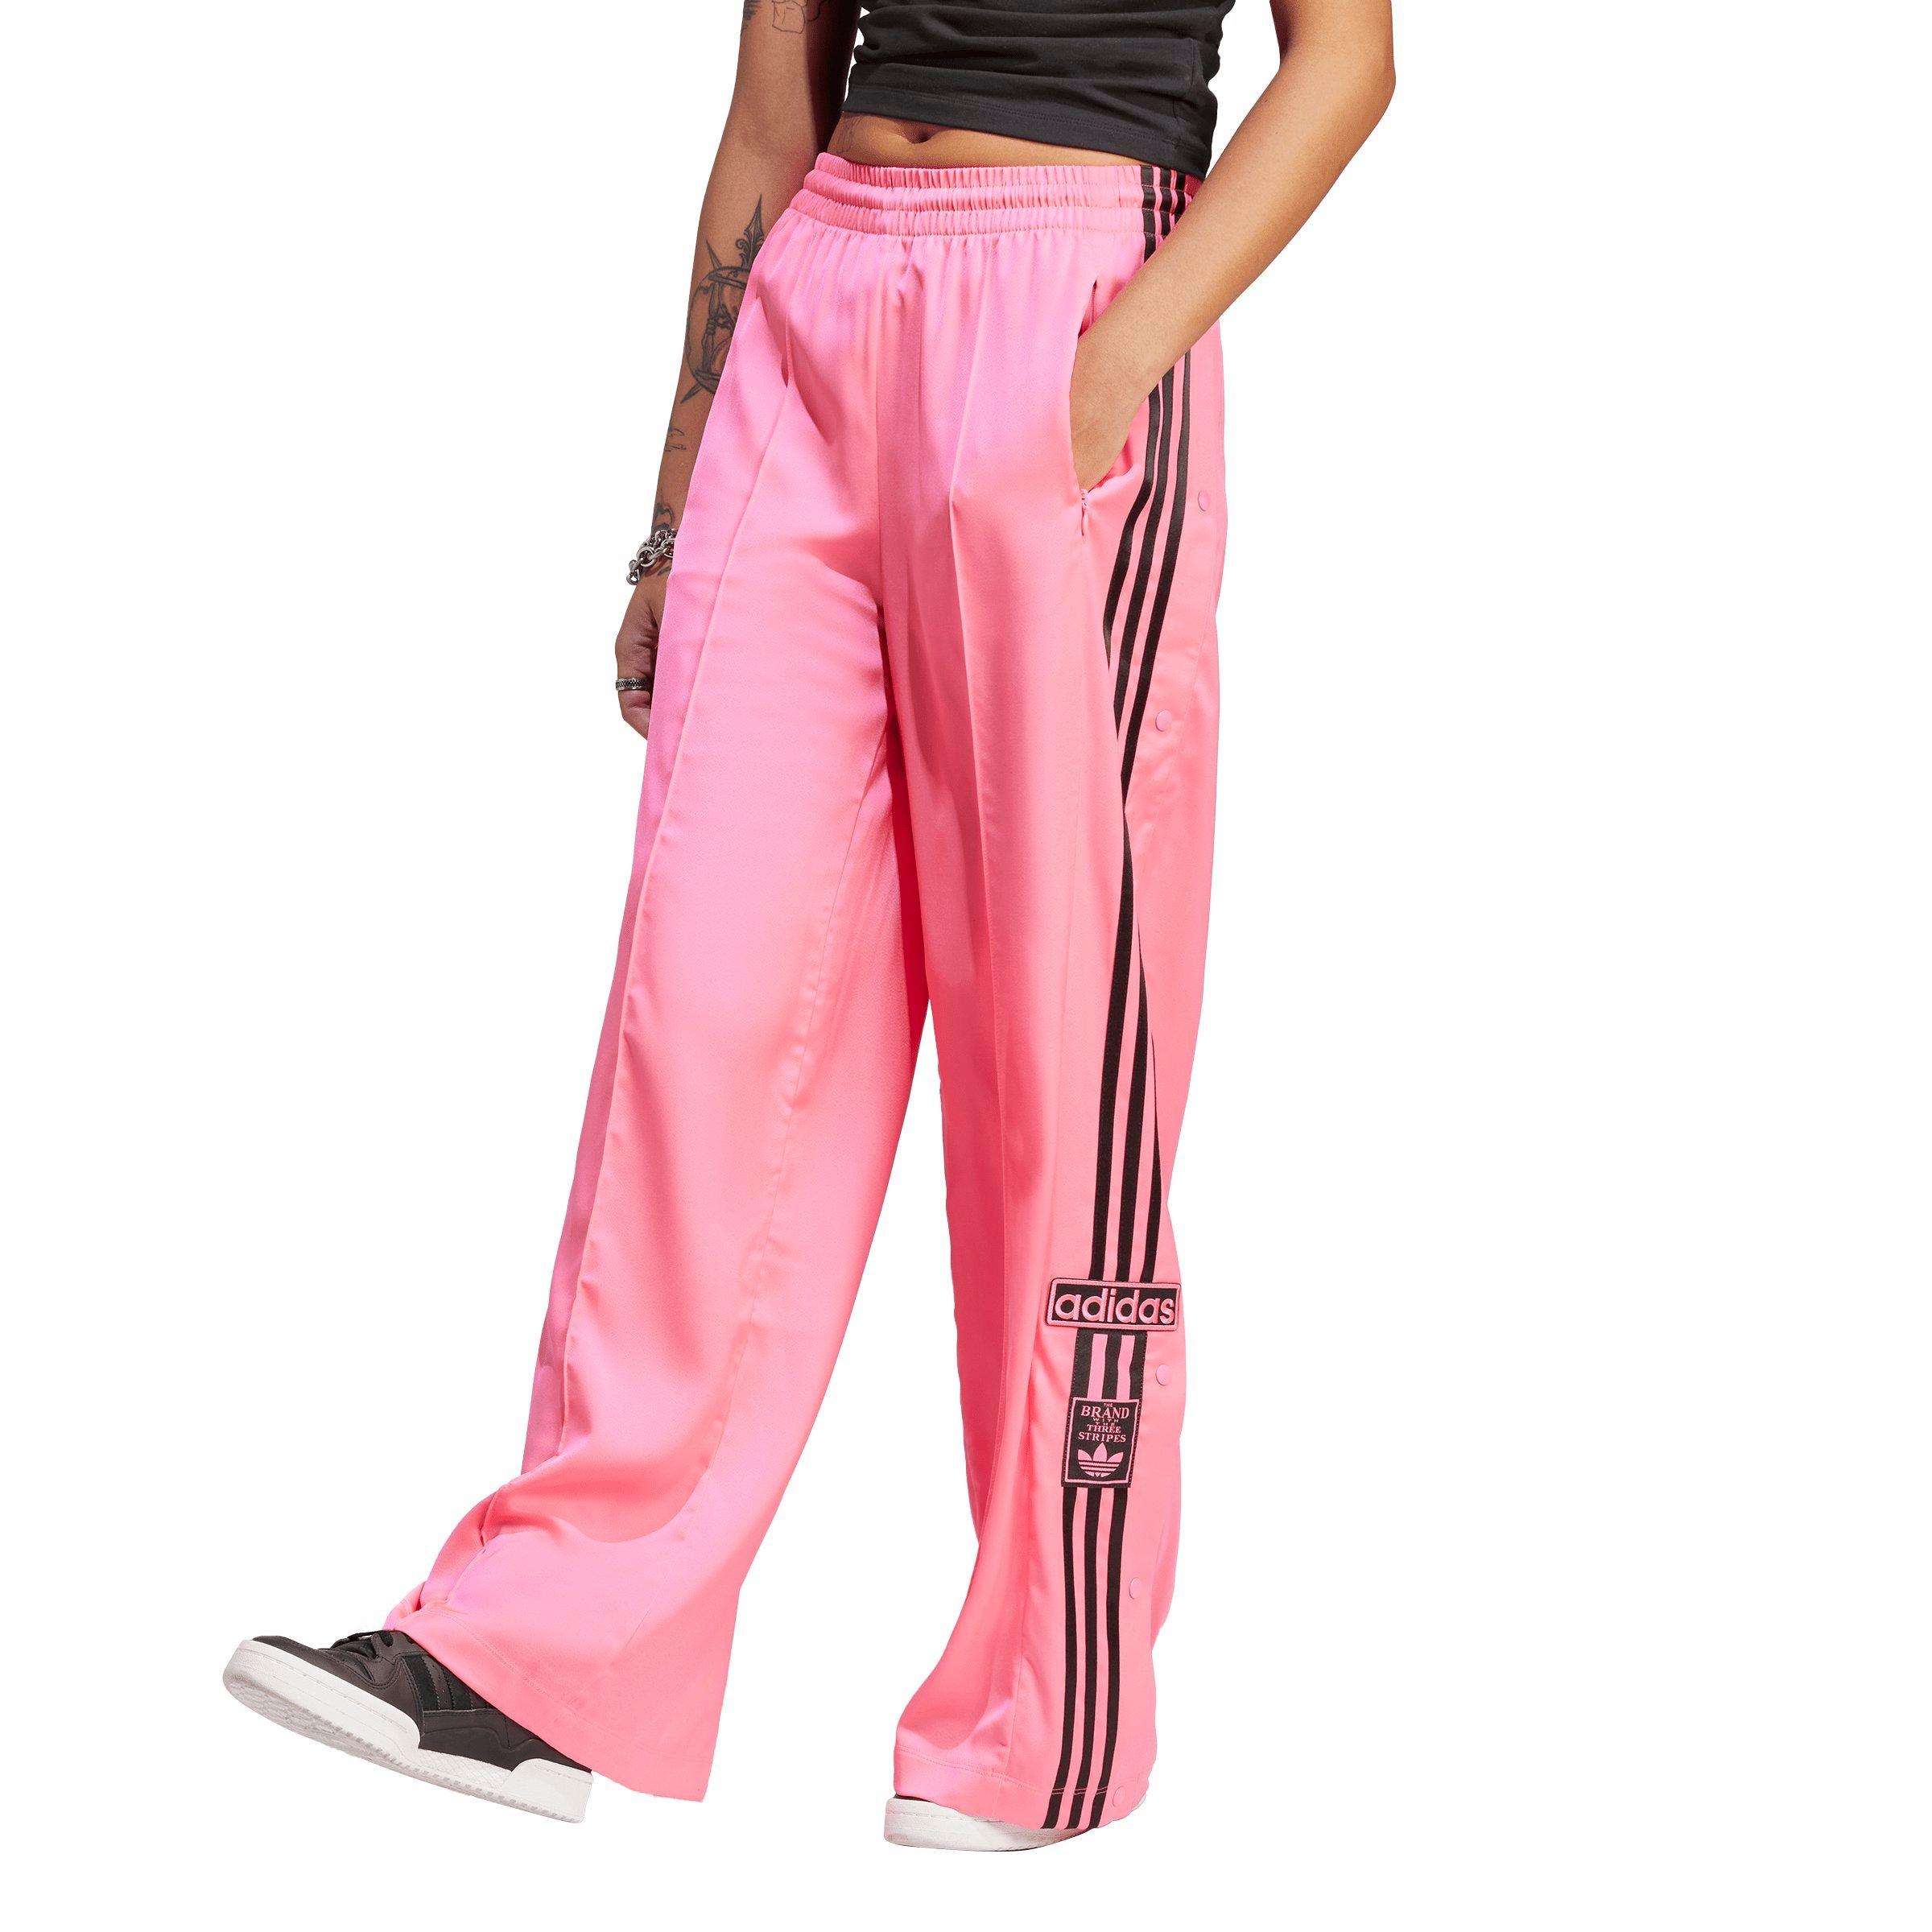 Women's Pink adidas Pants